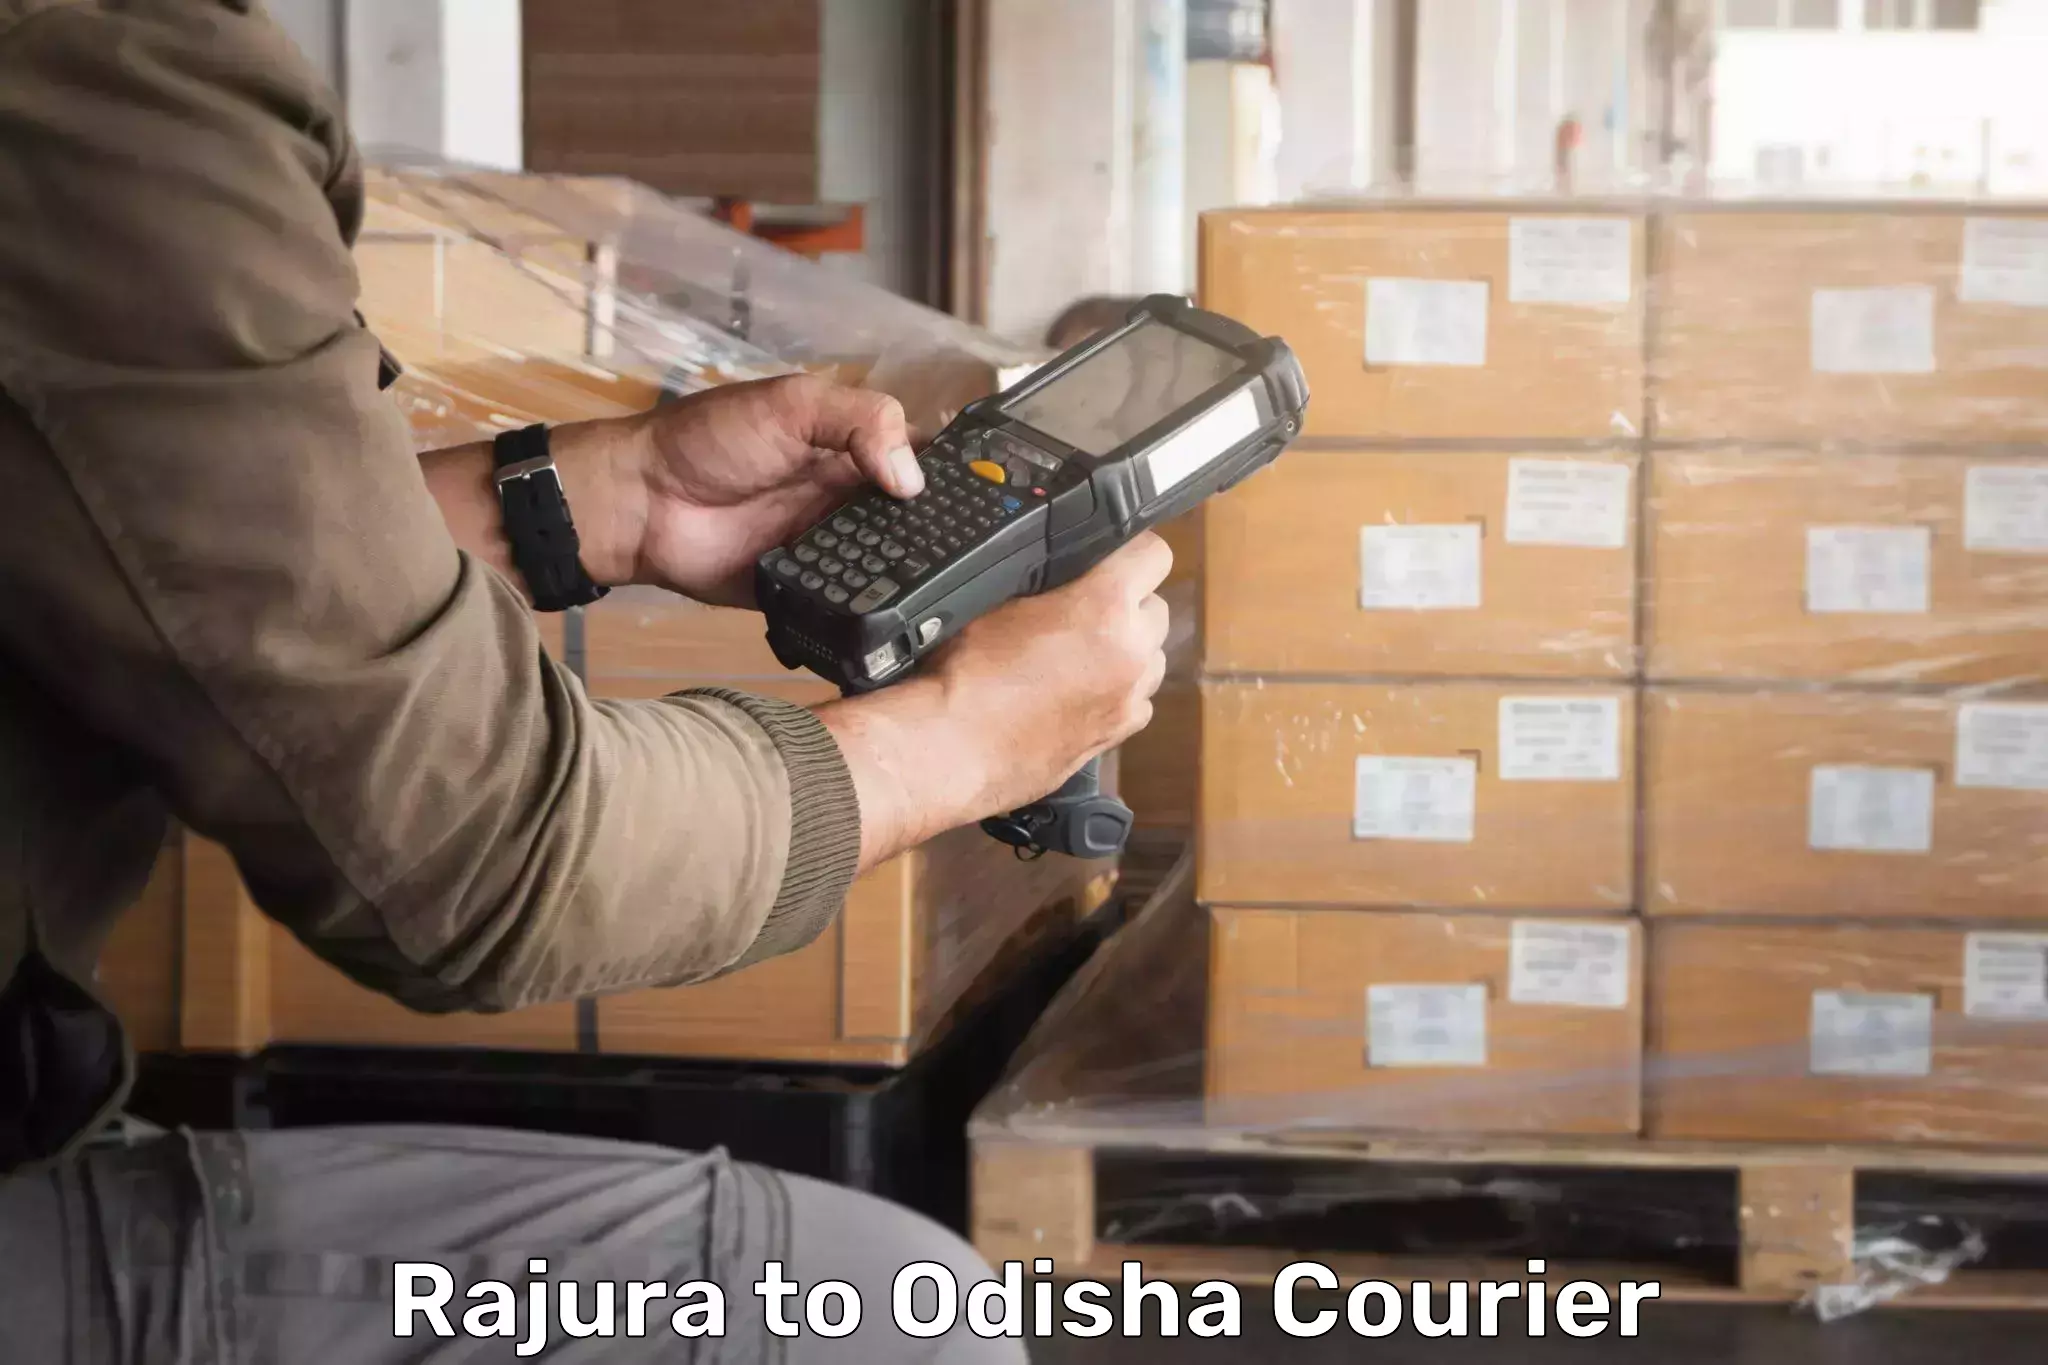 Professional courier handling in Rajura to Raruan